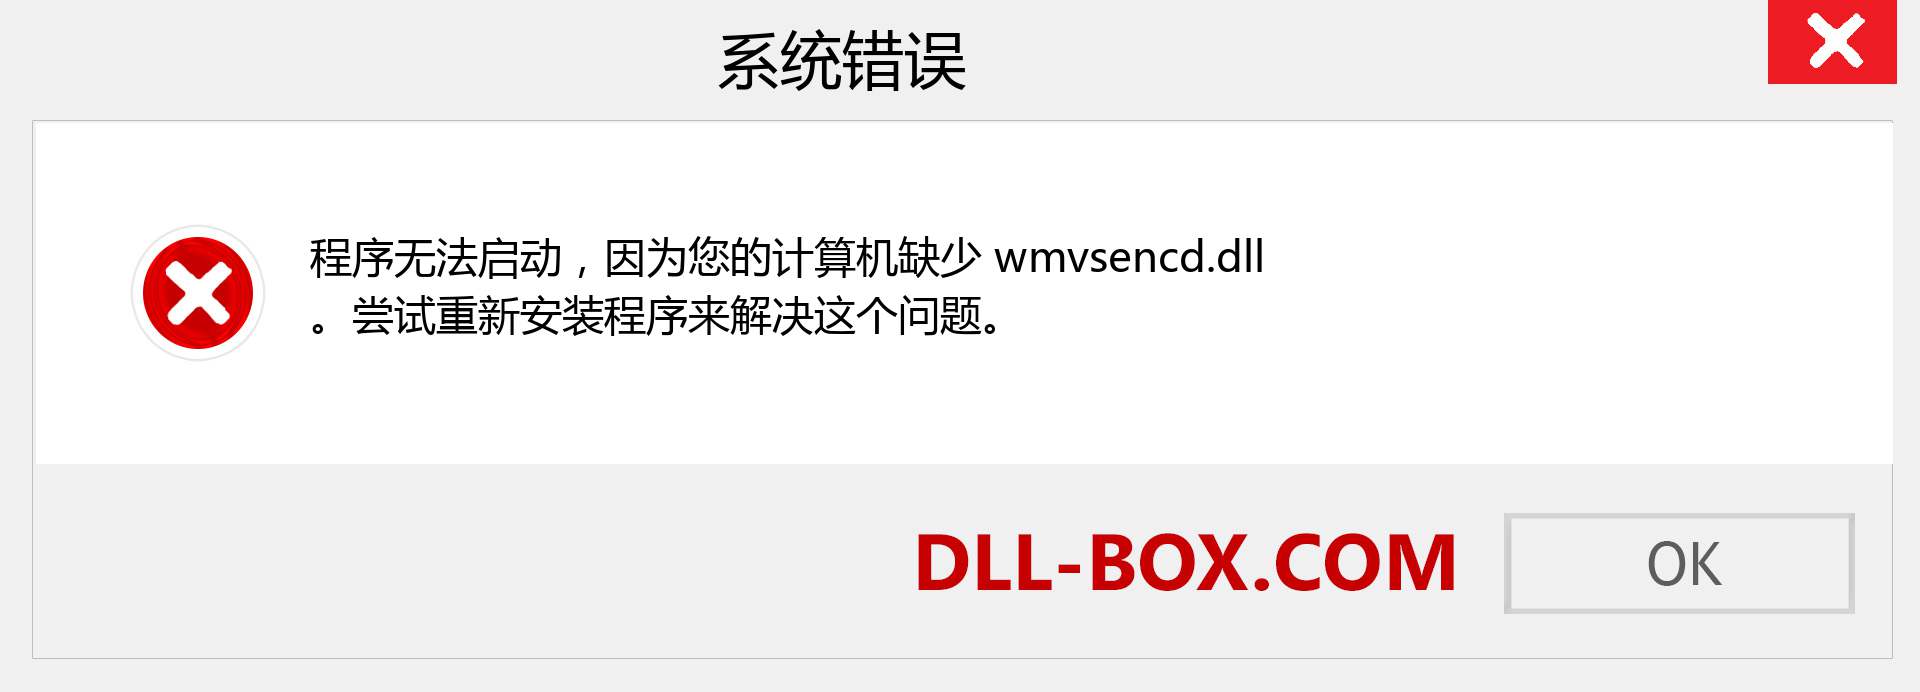 wmvsencd.dll 文件丢失？。 适用于 Windows 7、8、10 的下载 - 修复 Windows、照片、图像上的 wmvsencd dll 丢失错误